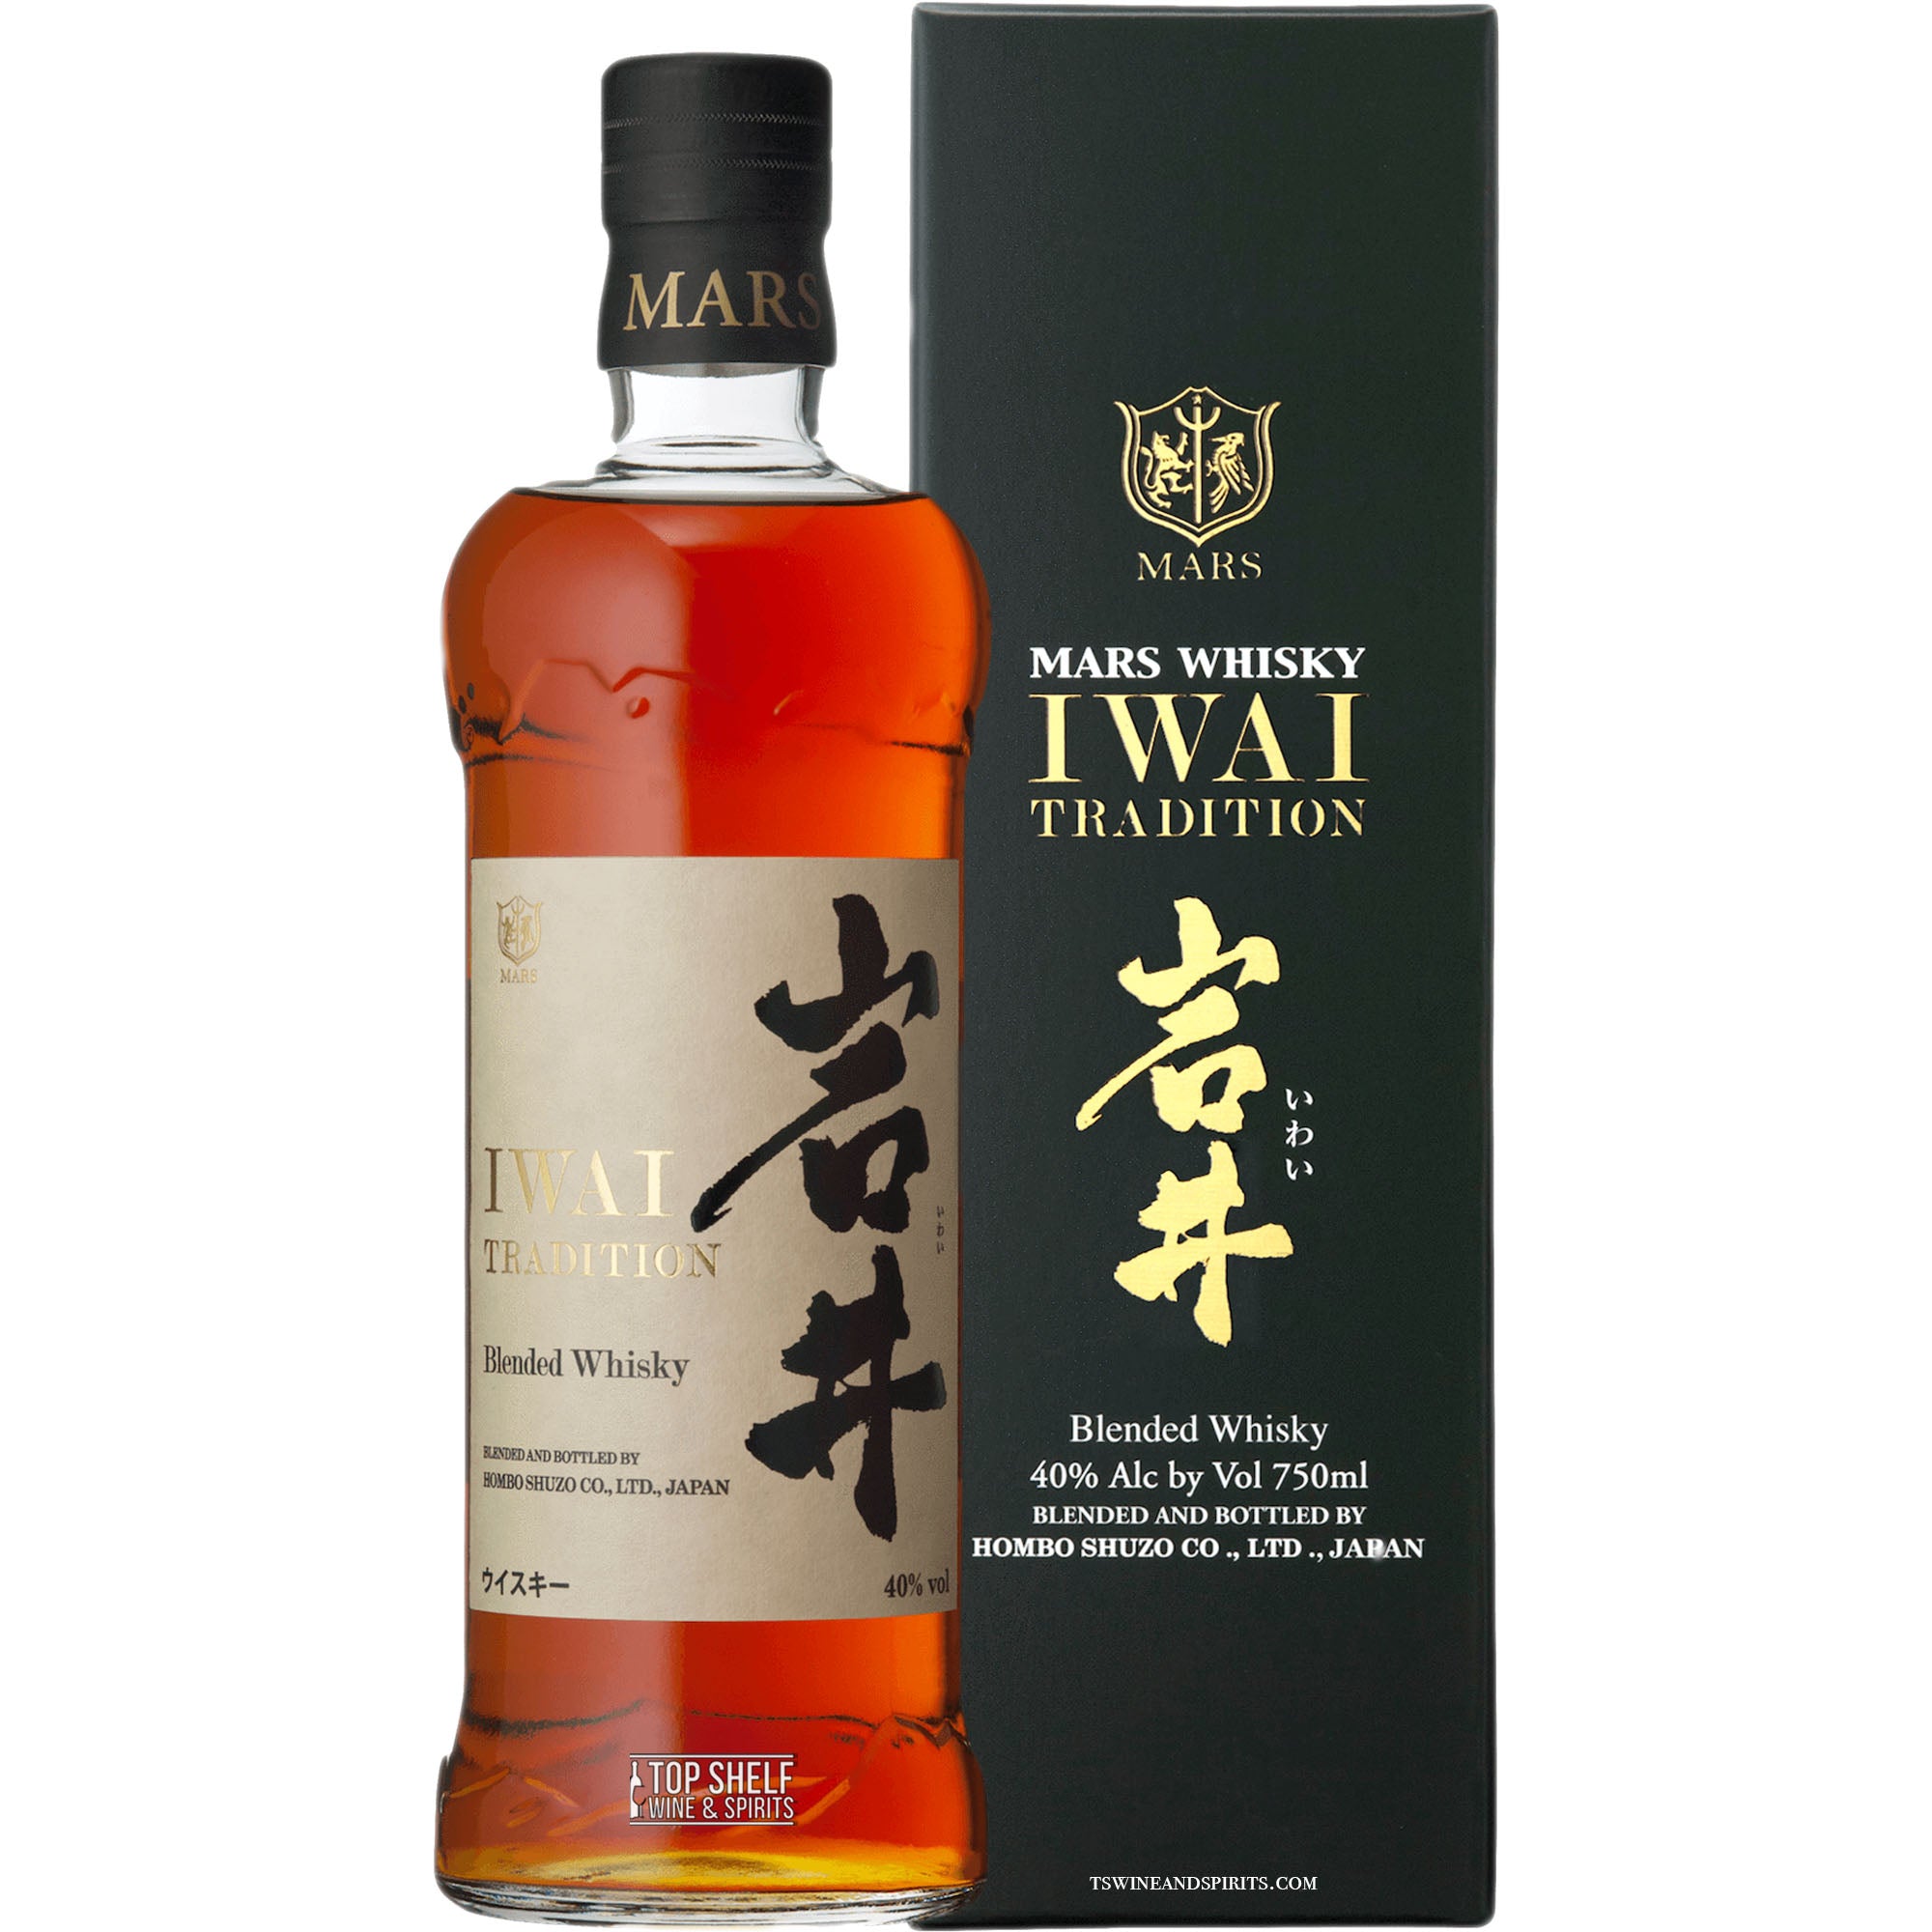 Shinshu Mars Iwai Tradition Whisky - 750 ml bottle